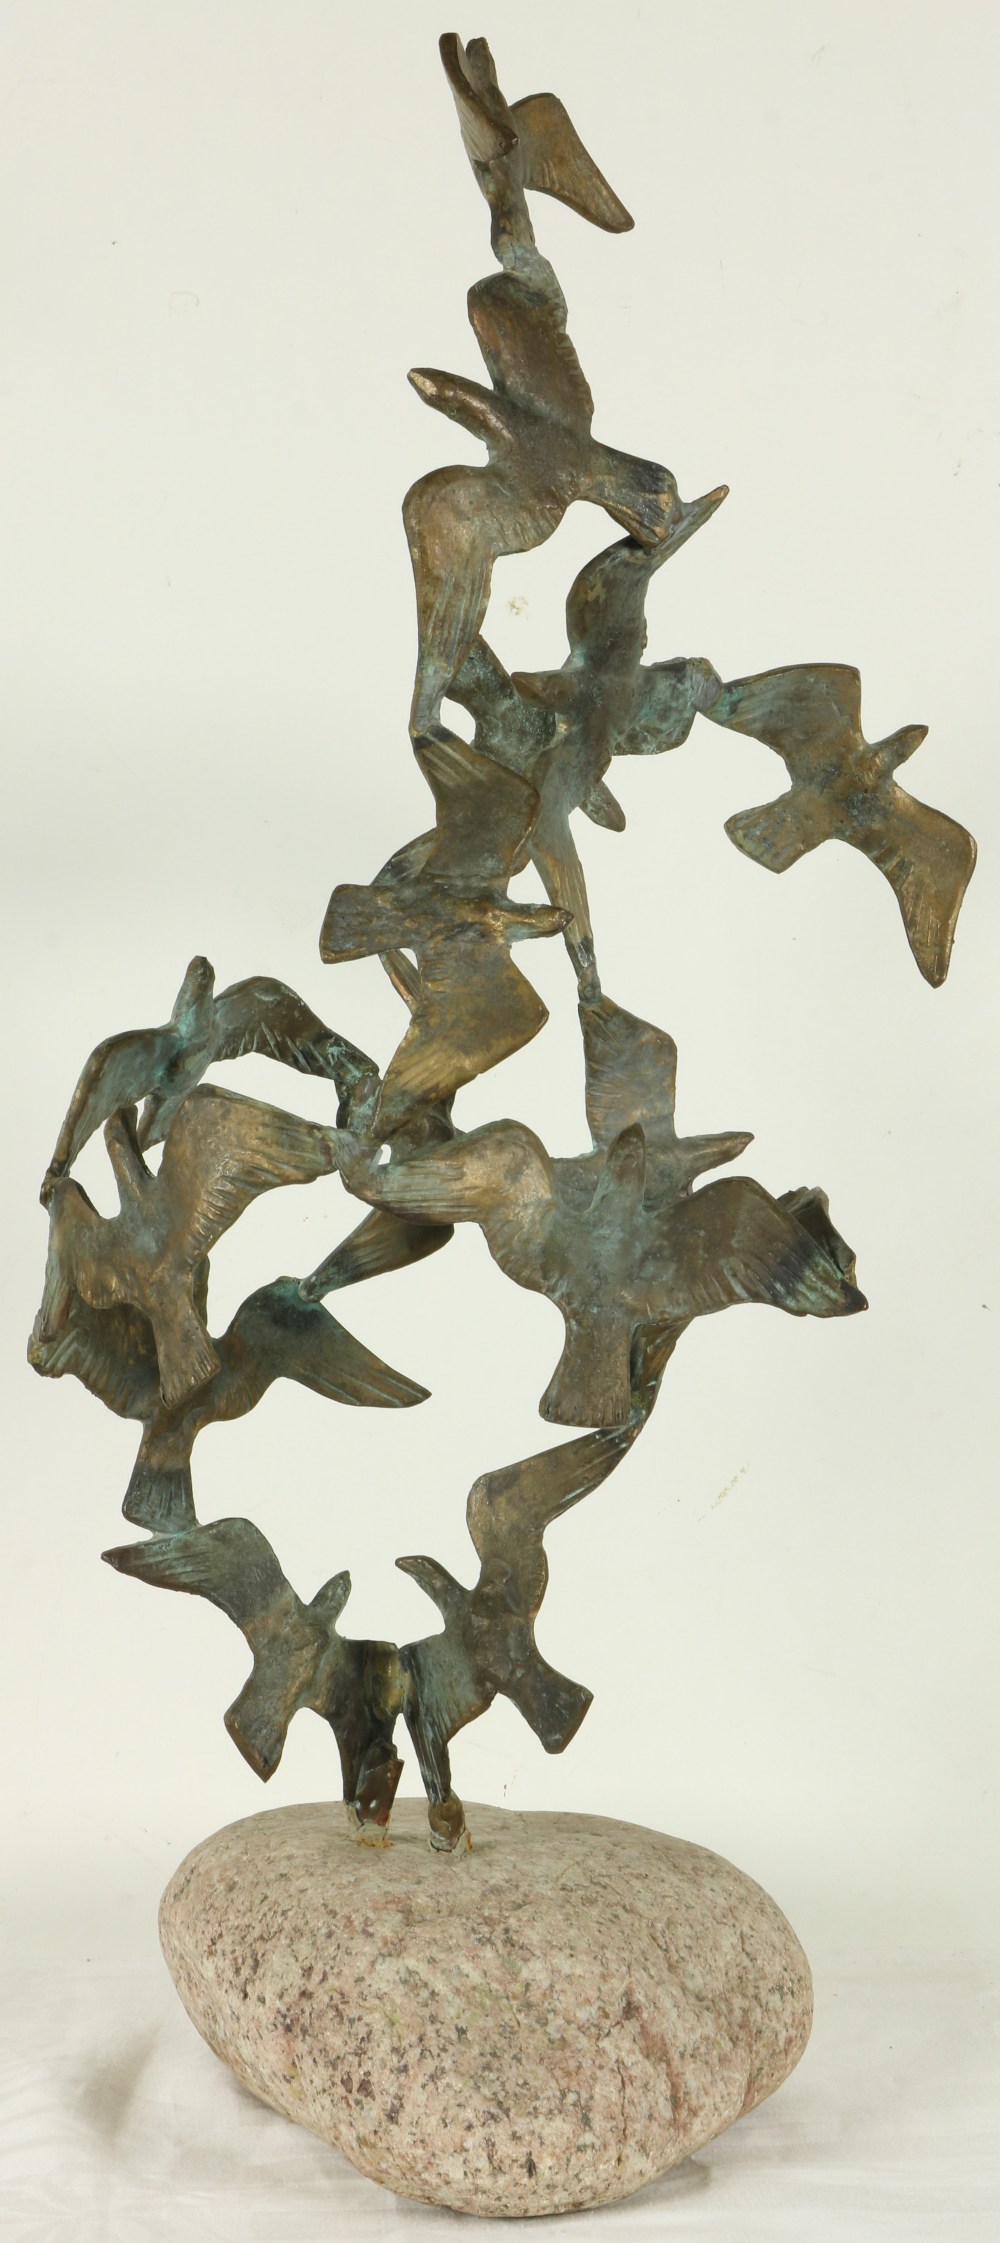 John Behan, Irish, RHA ( b.1938) "Birds in Flight," bronze sculpture, surmounted on natural stone, - Image 3 of 4